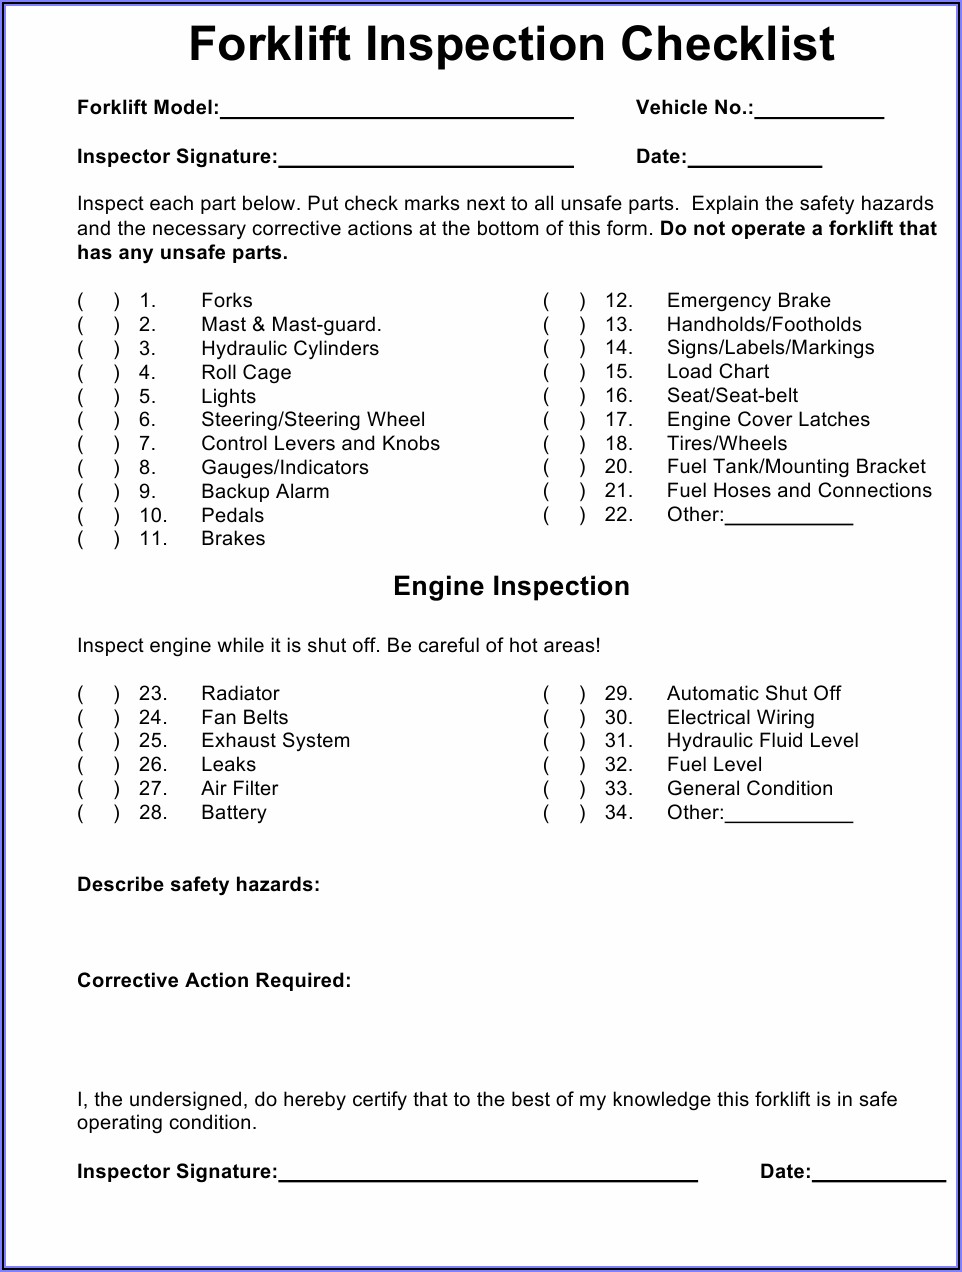 Forklift Inspection Checklist Template